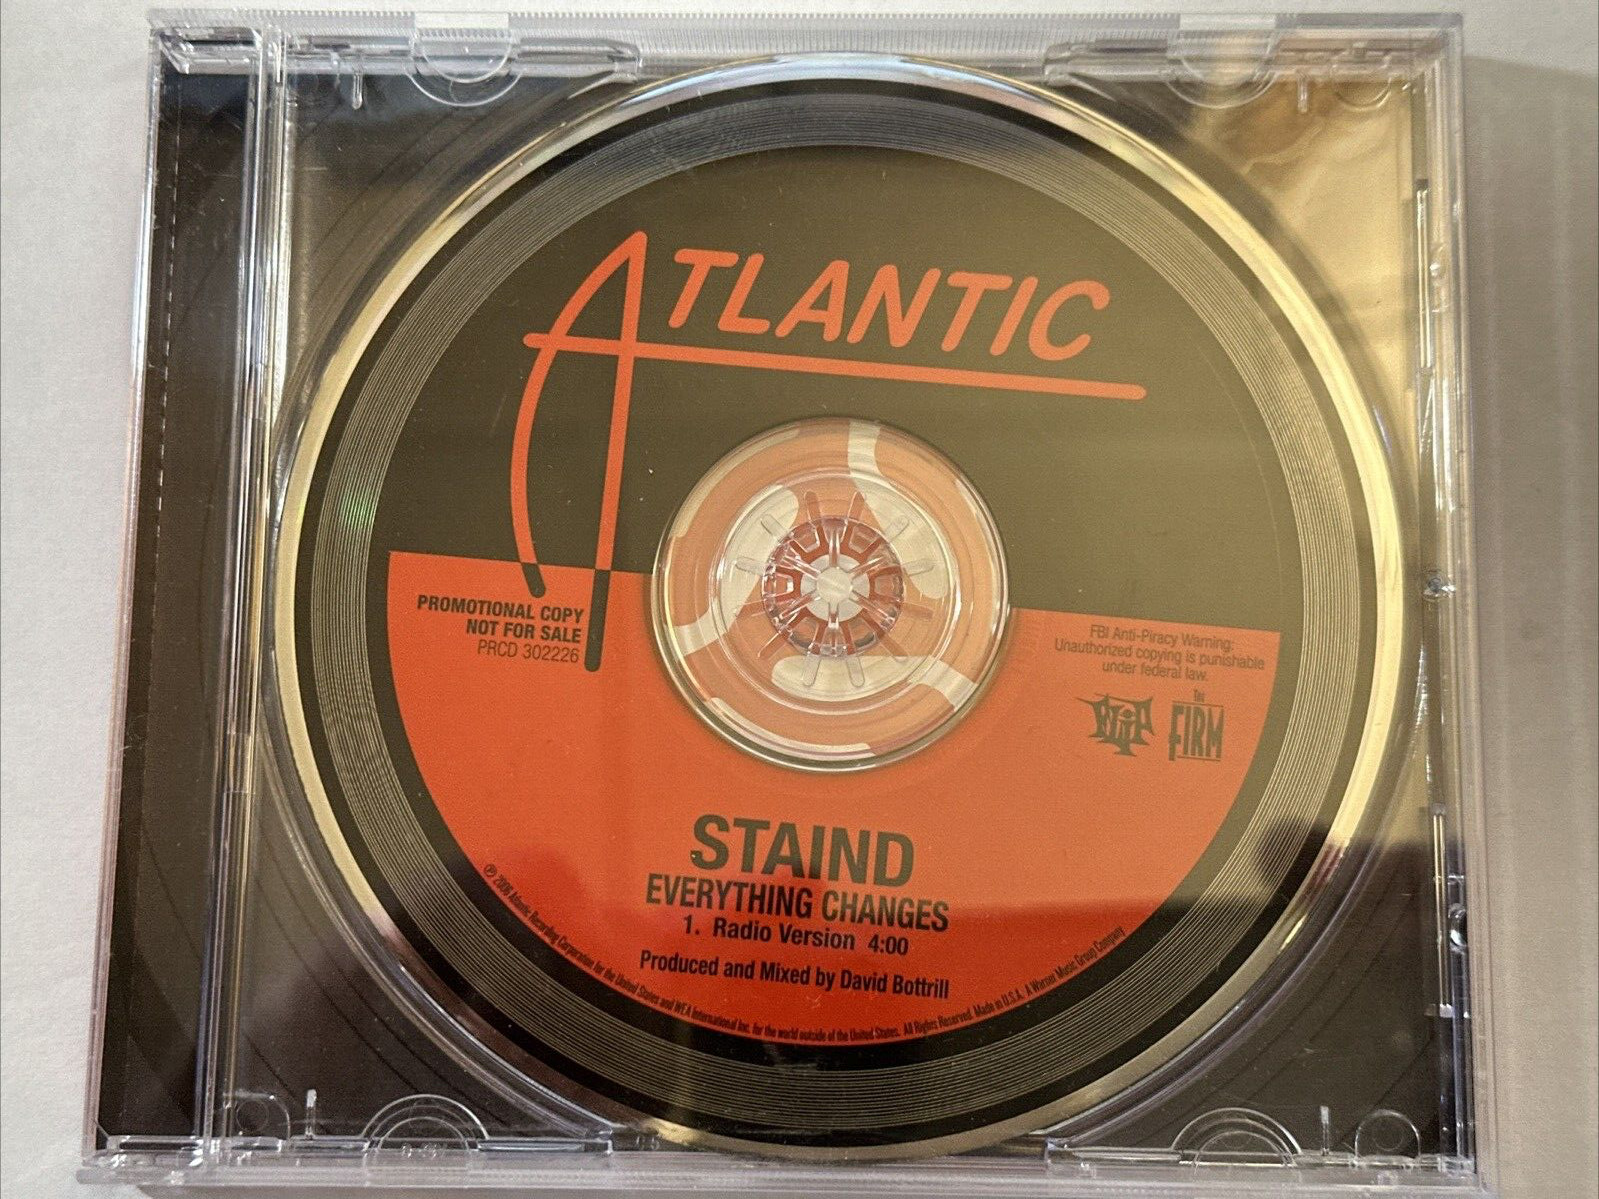 Staind - Everything Changes [Radio Version] RARE promo CD single \'06